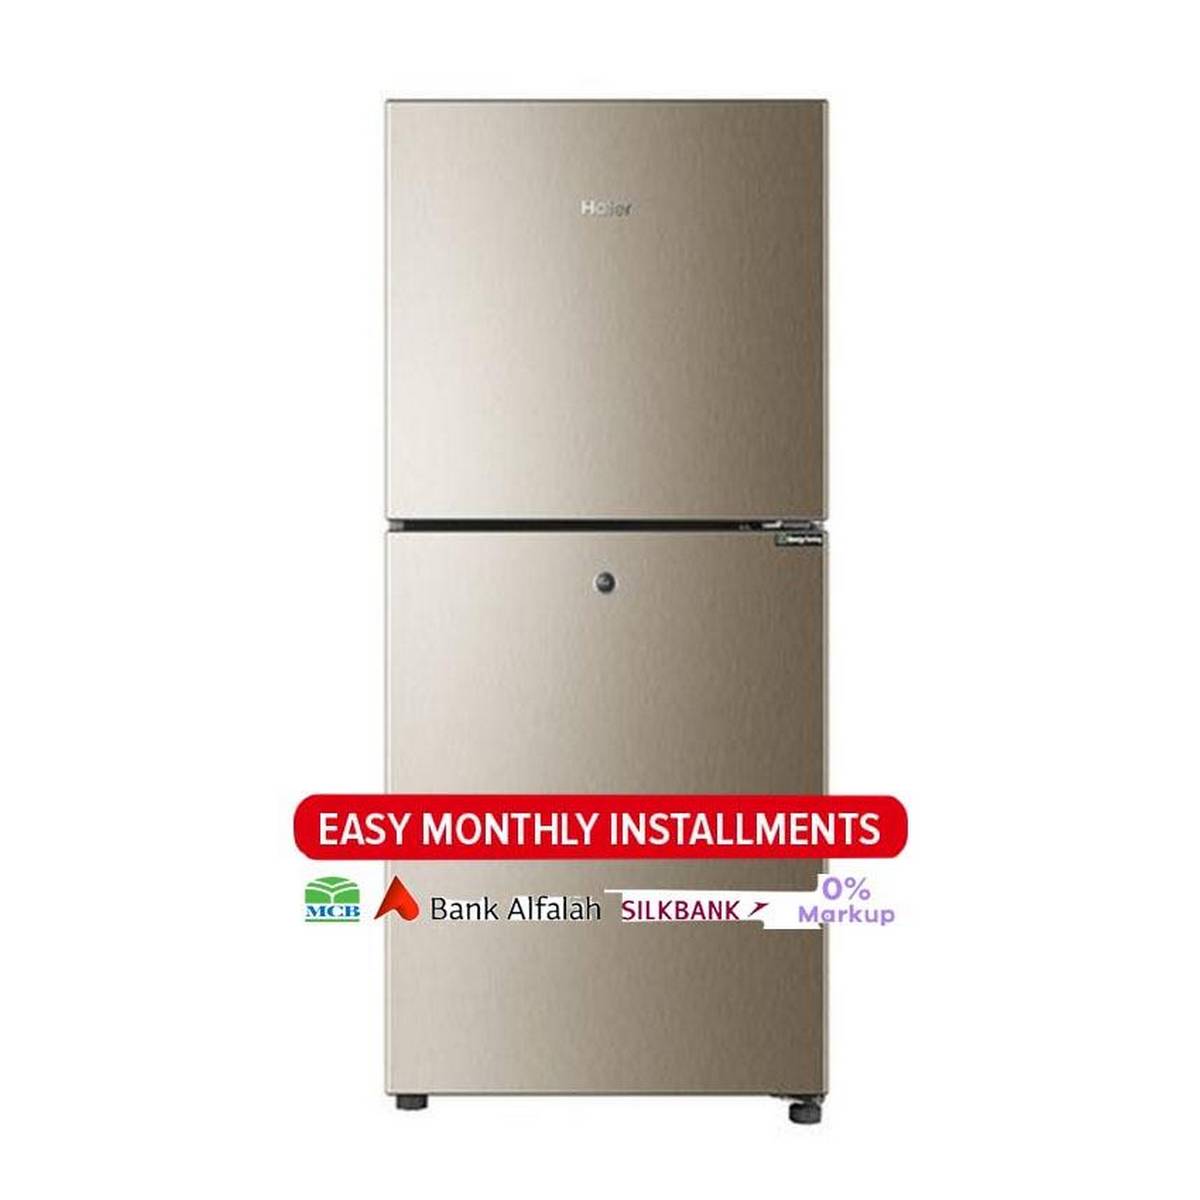 43++ Haier refrigerator e star series price in pakistan information